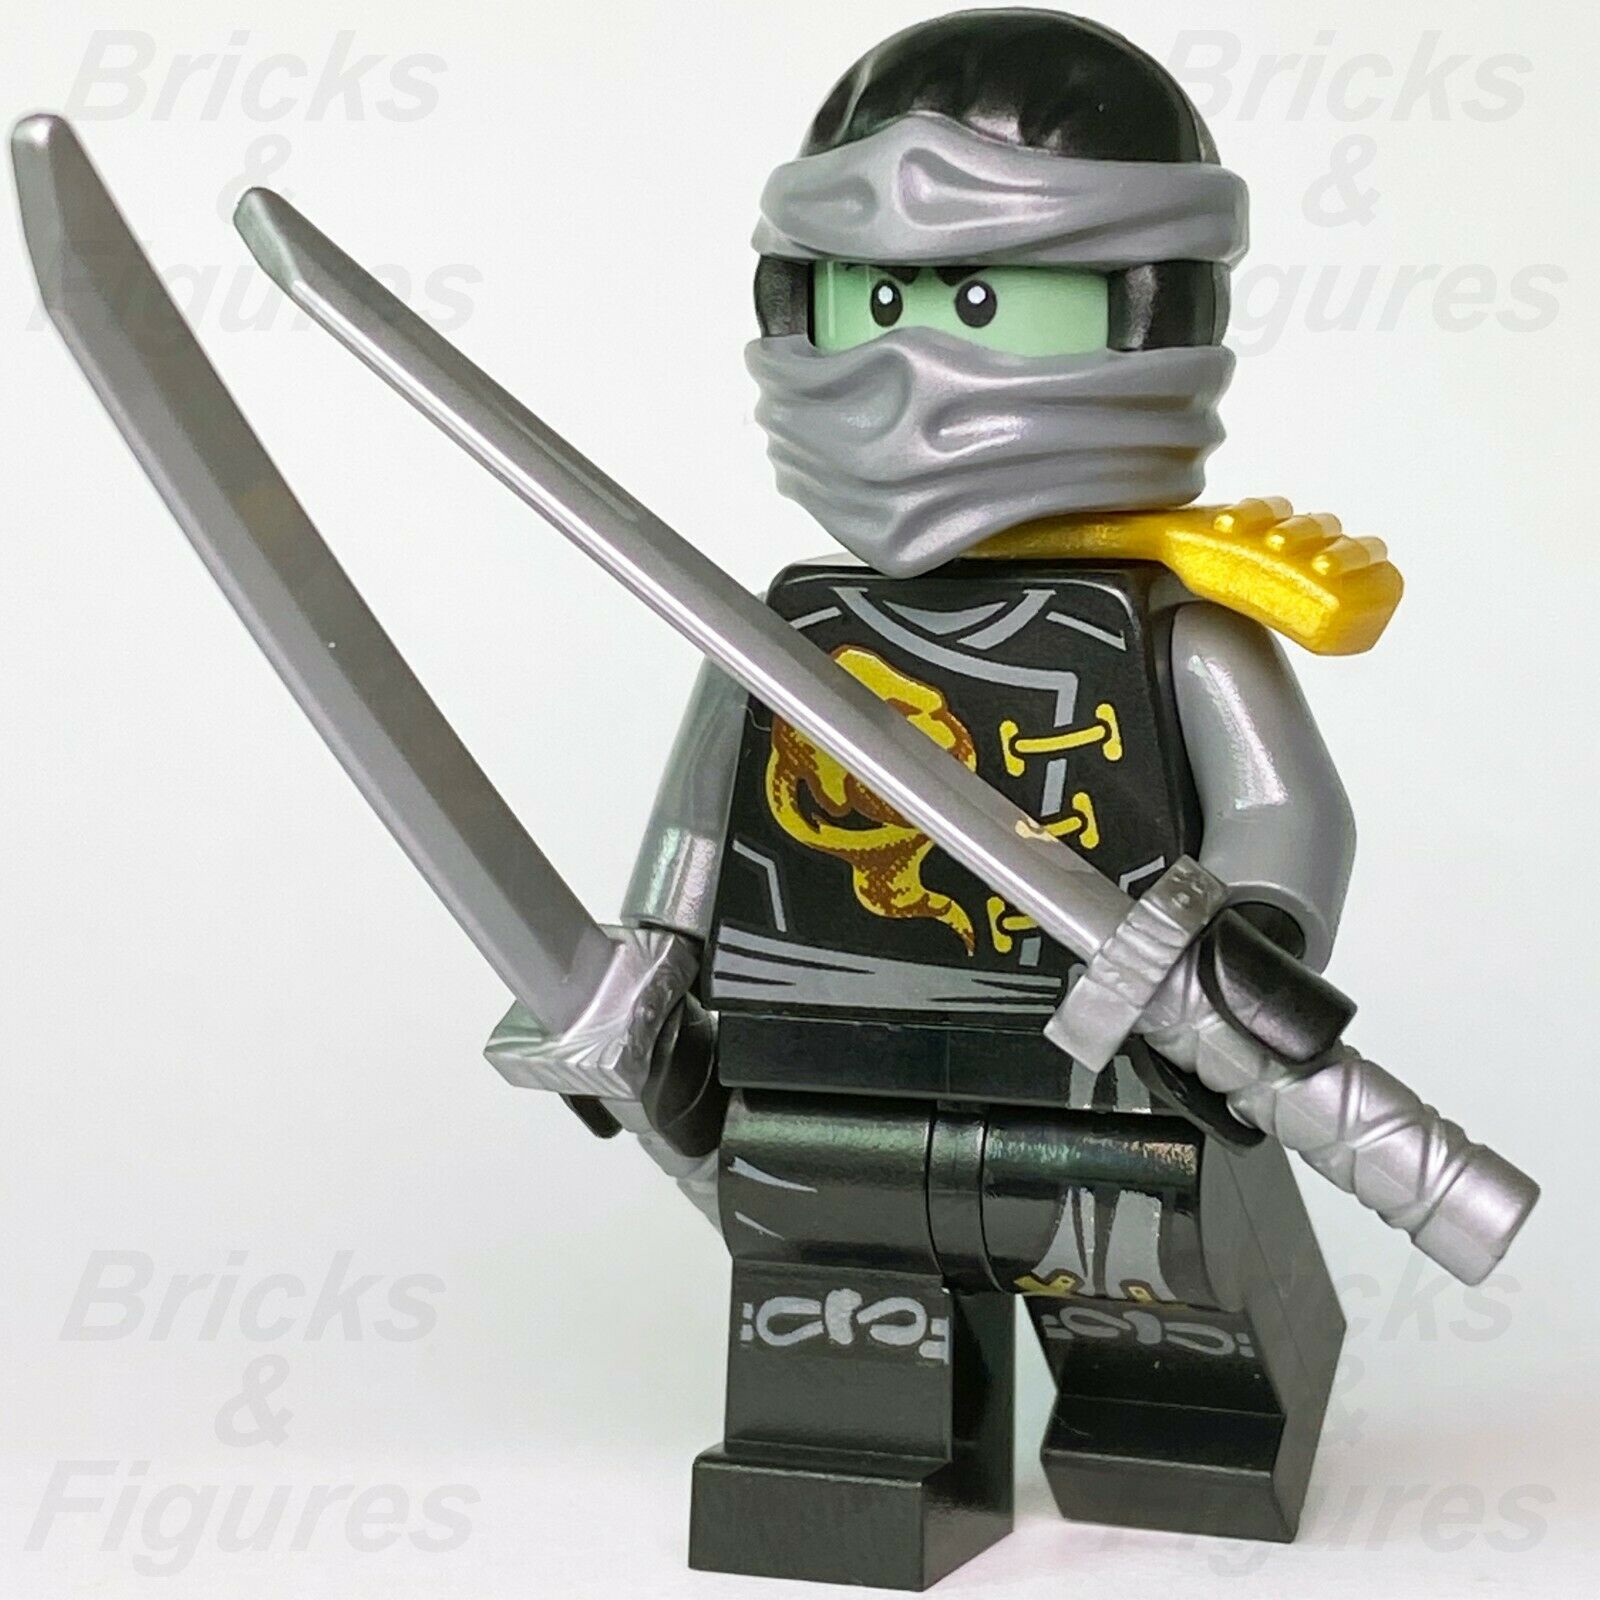 New Ninjago LEGO Ninja Cole Ghost Skybound Master of Earth Minifigure 70604 - Bricks & Figures